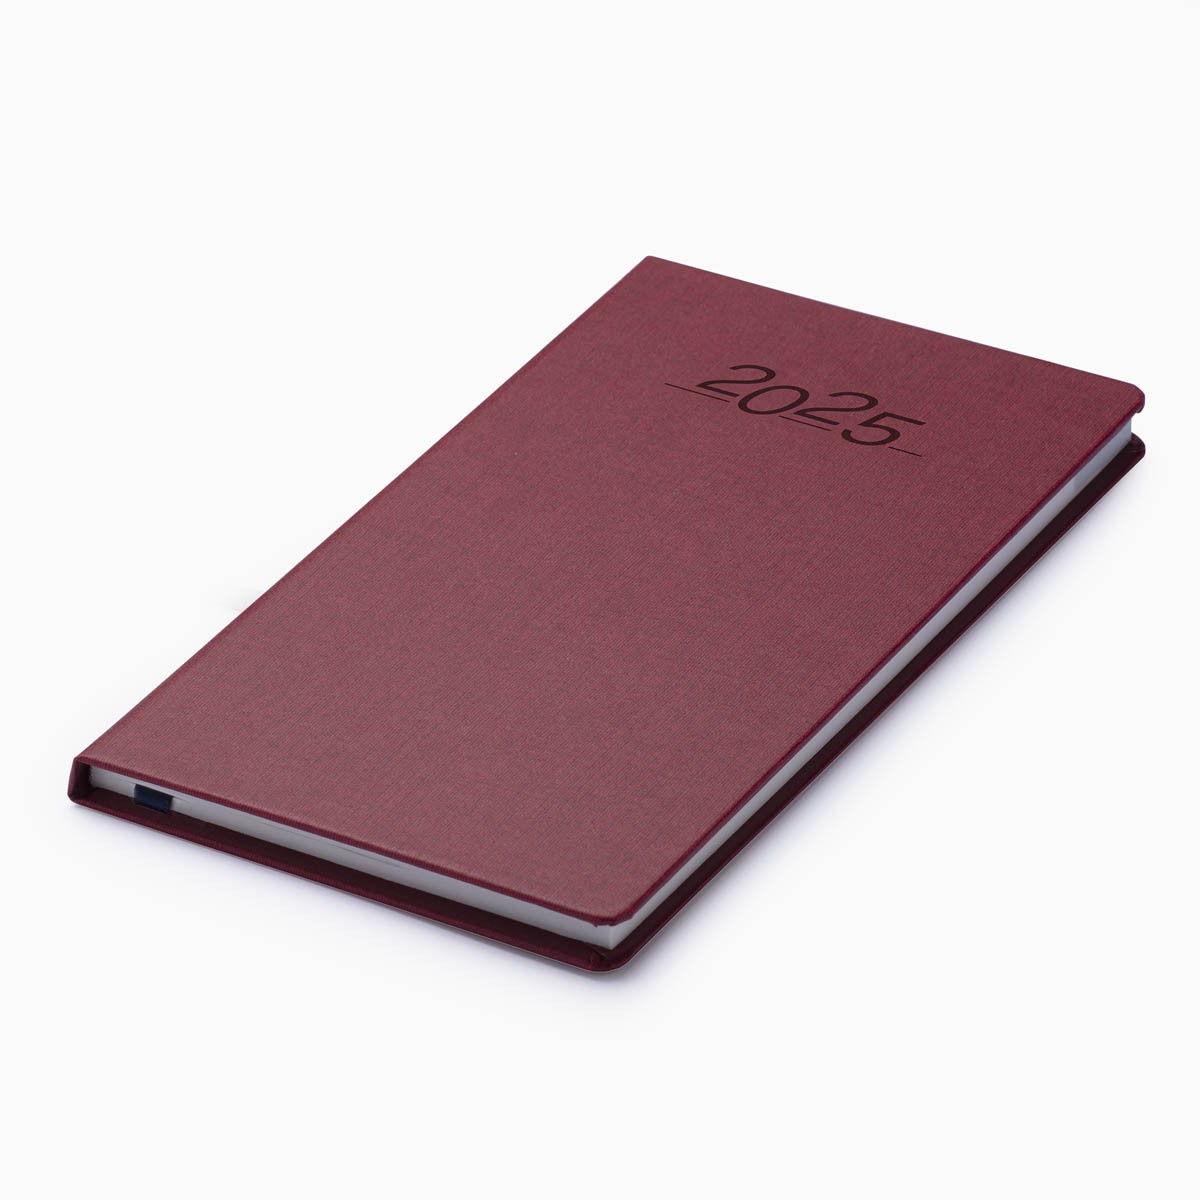 Nero Pocket Diary - White Pages